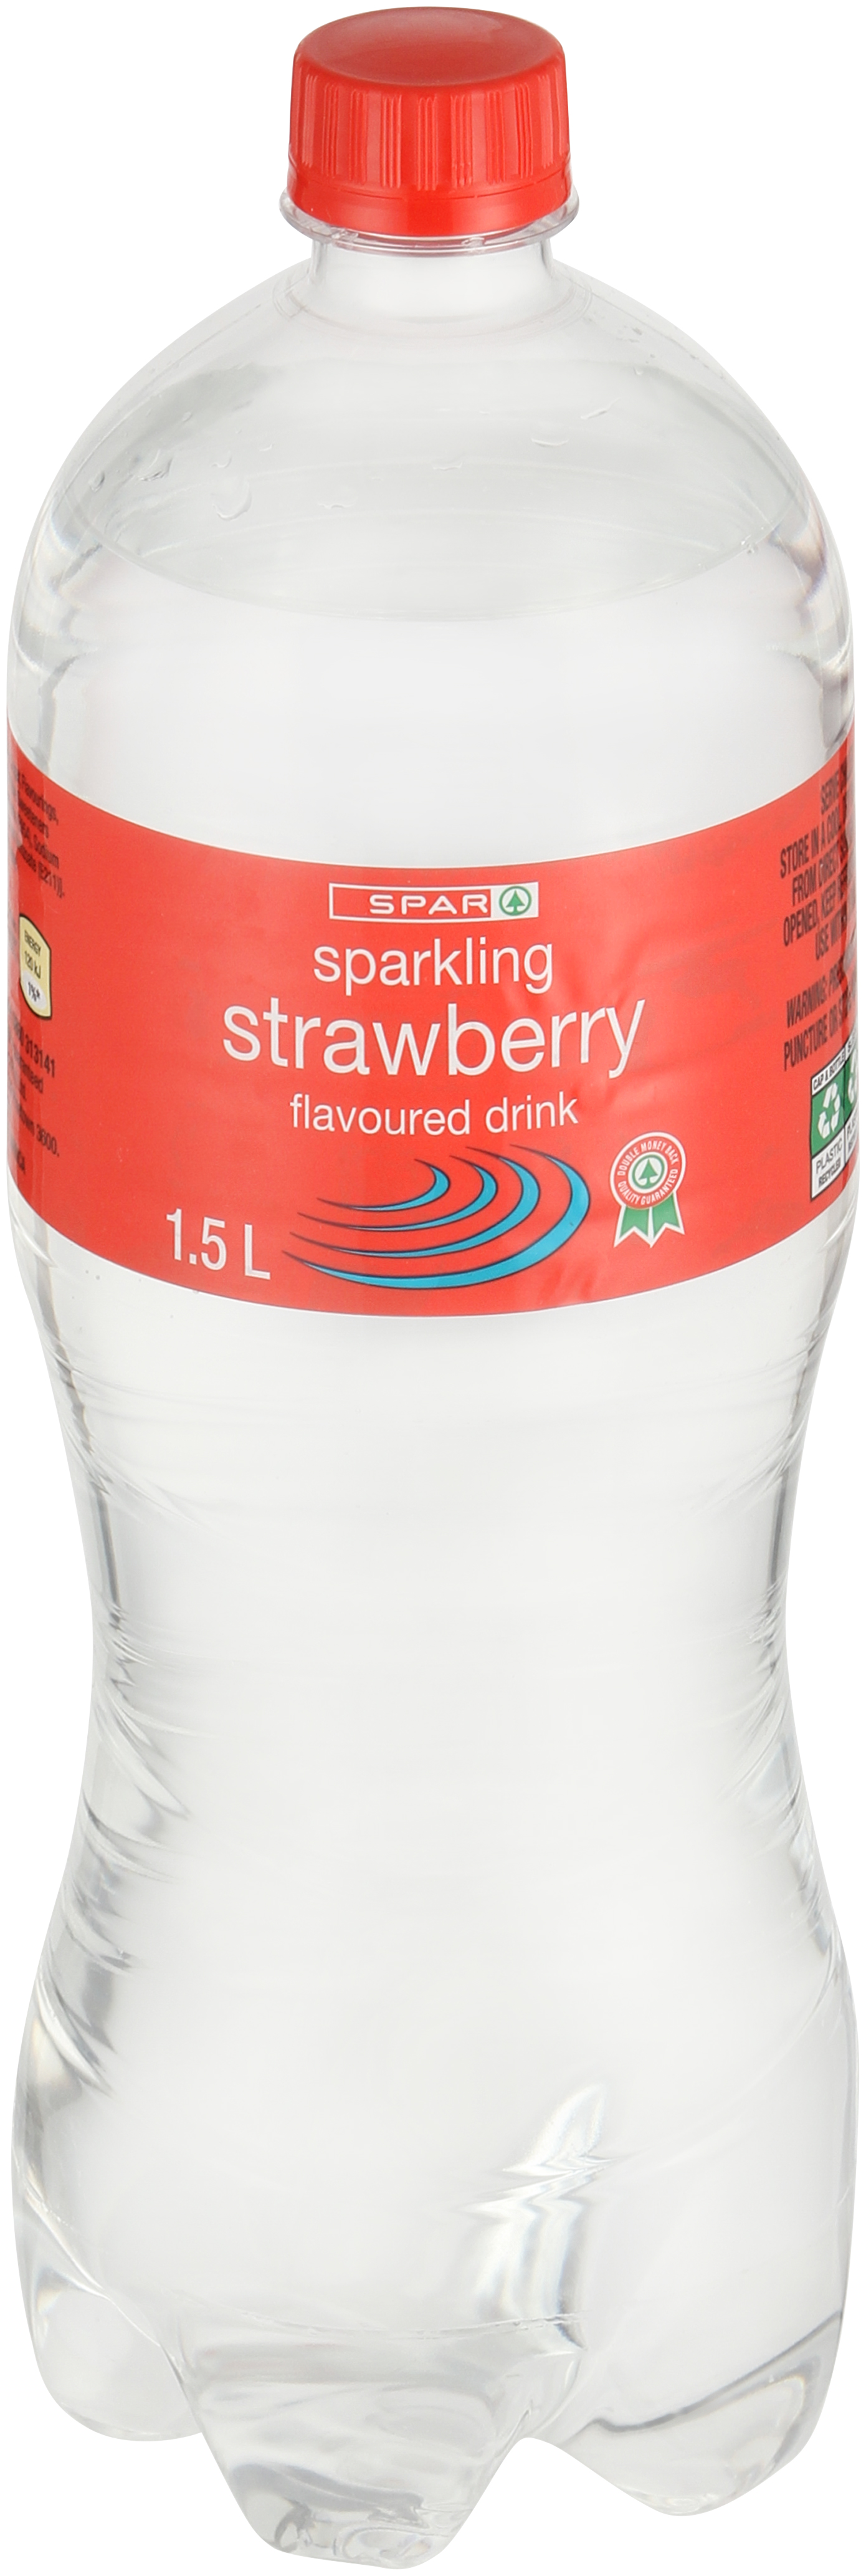 sparkling flavoured drink strawberry